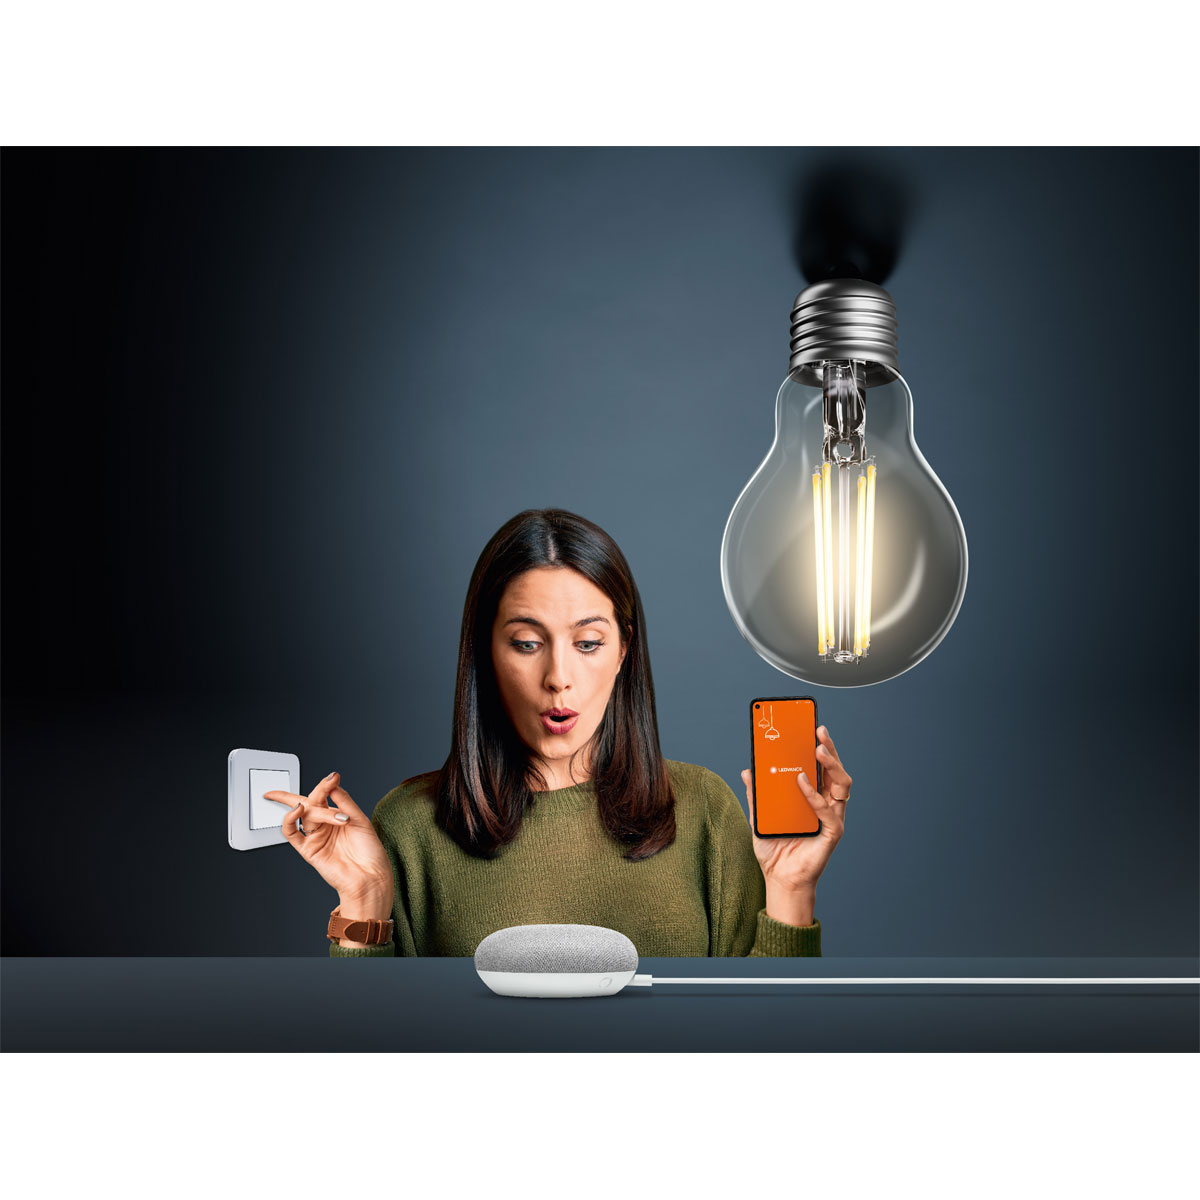 Ledvance SMART+ LED-Leuchtmittel VolksLicht E27 smart dimmbar